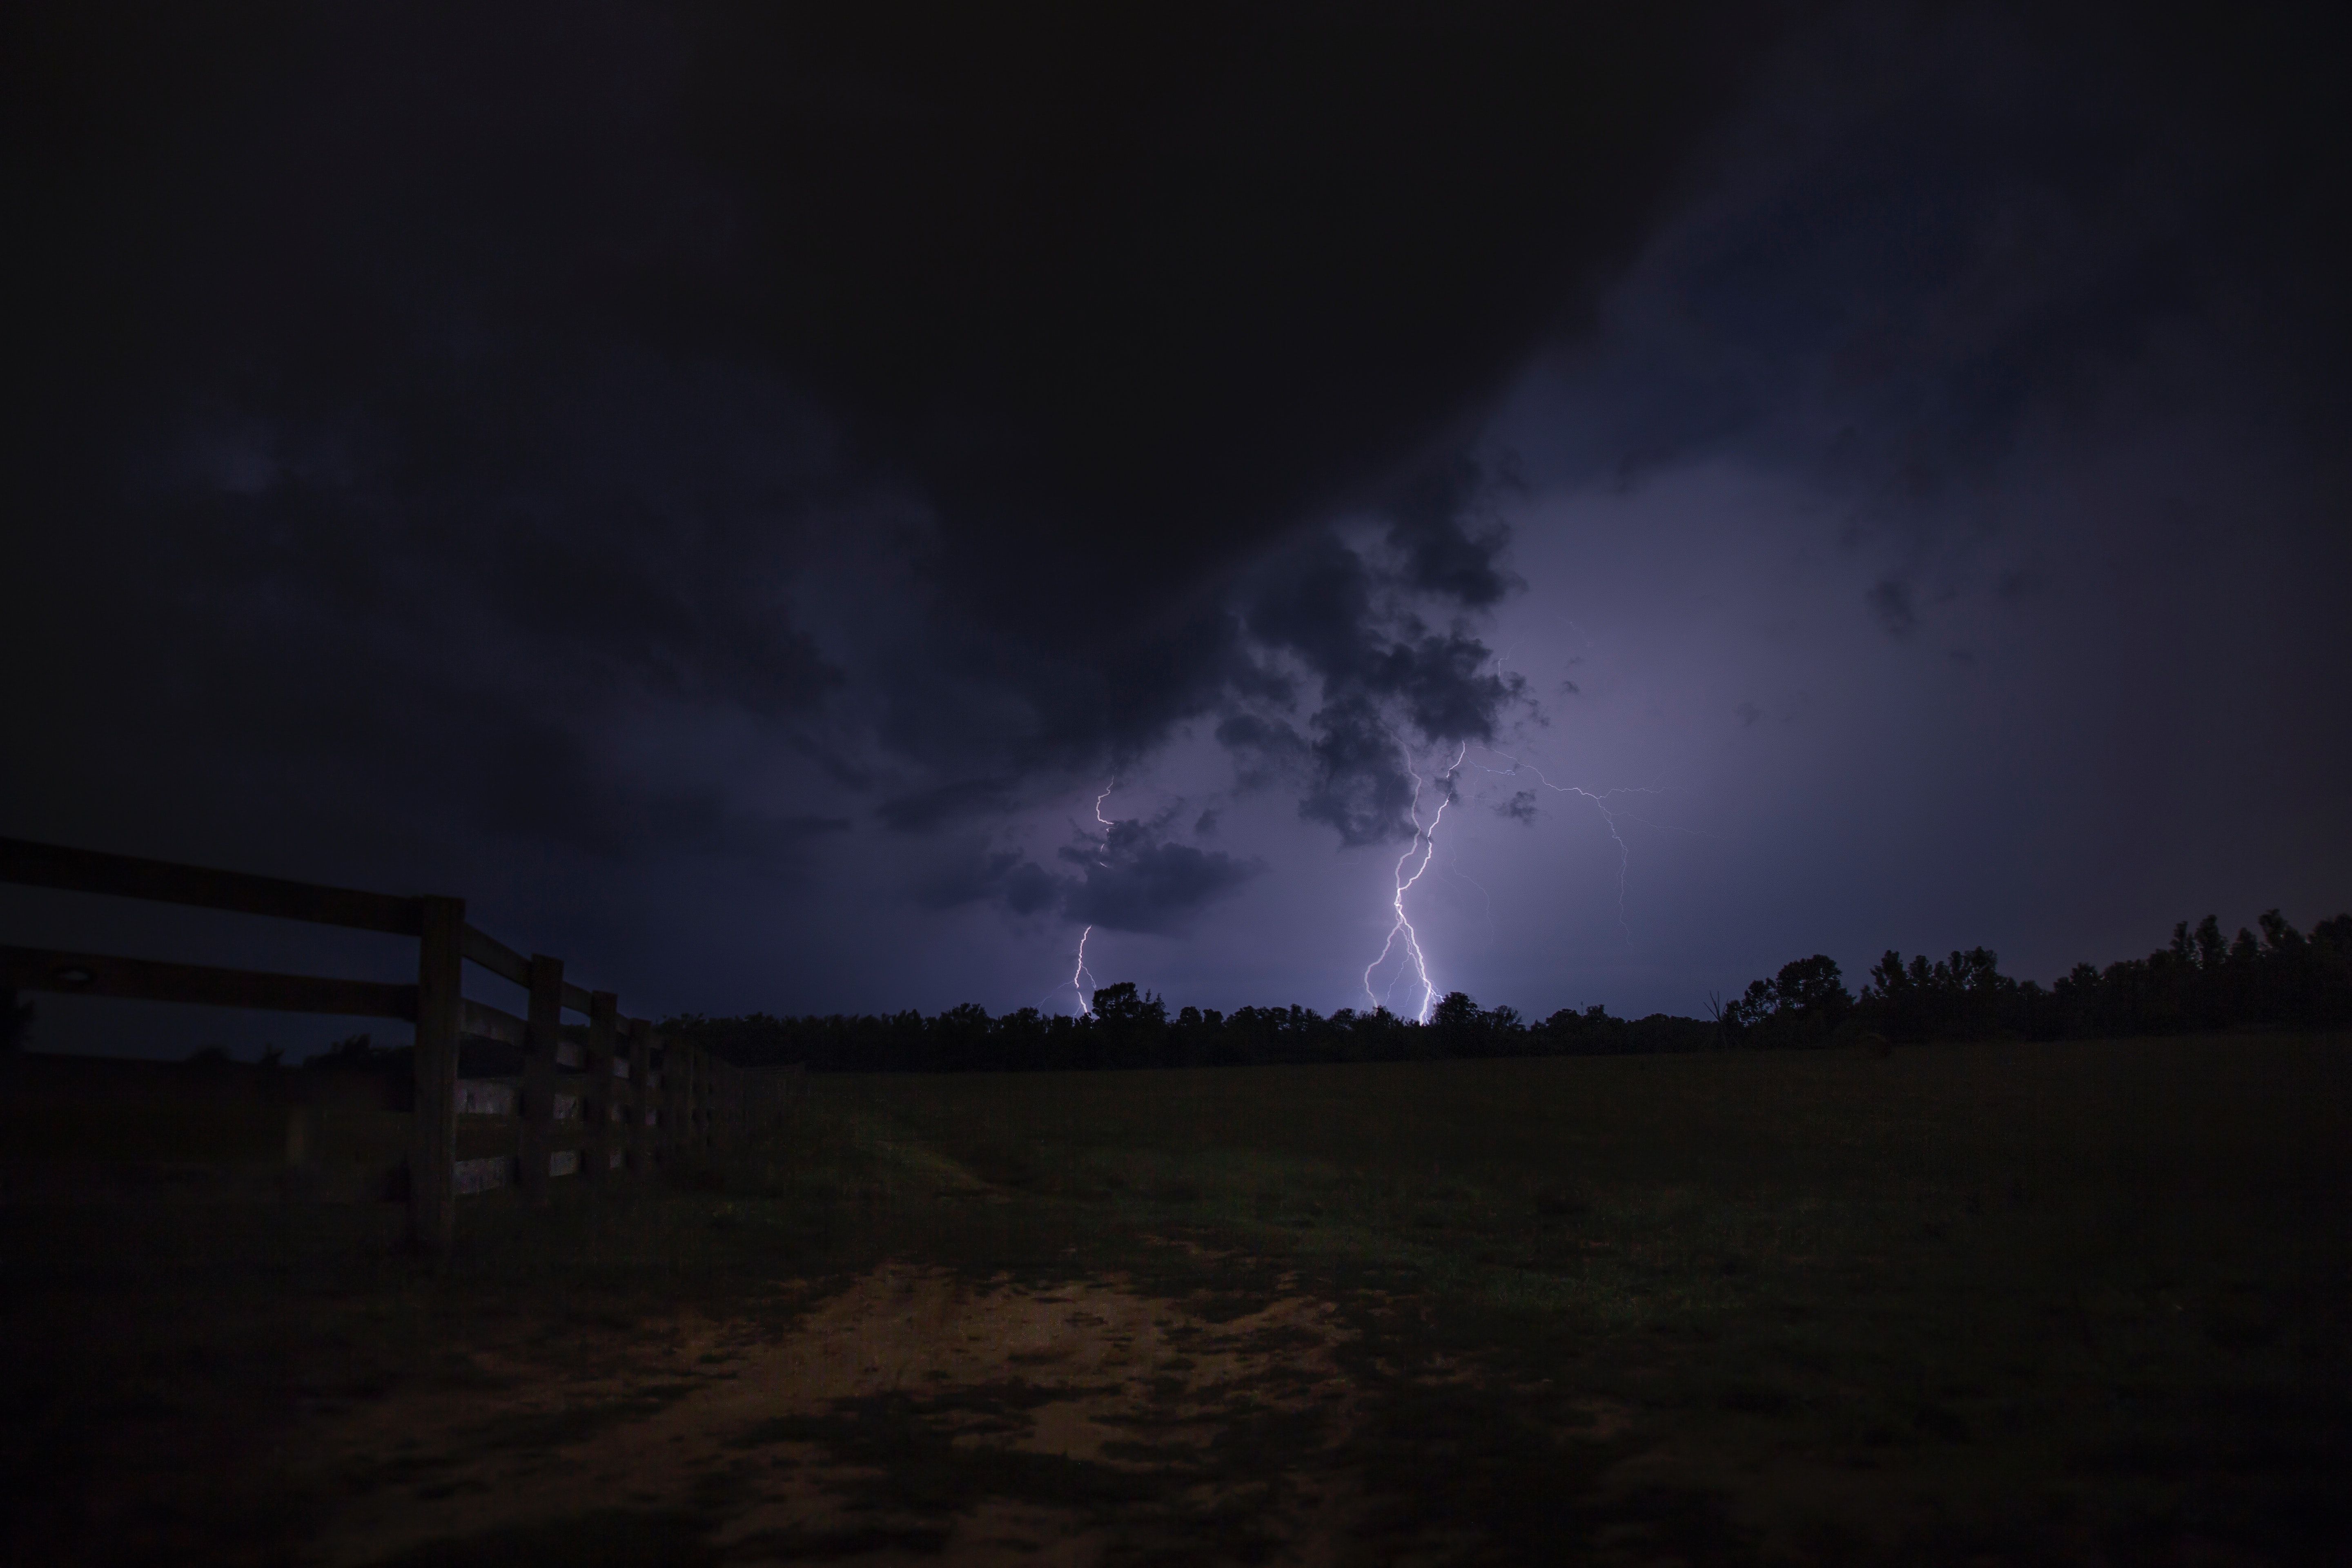 Free photo: Lightning Strike the Ground during Night Time